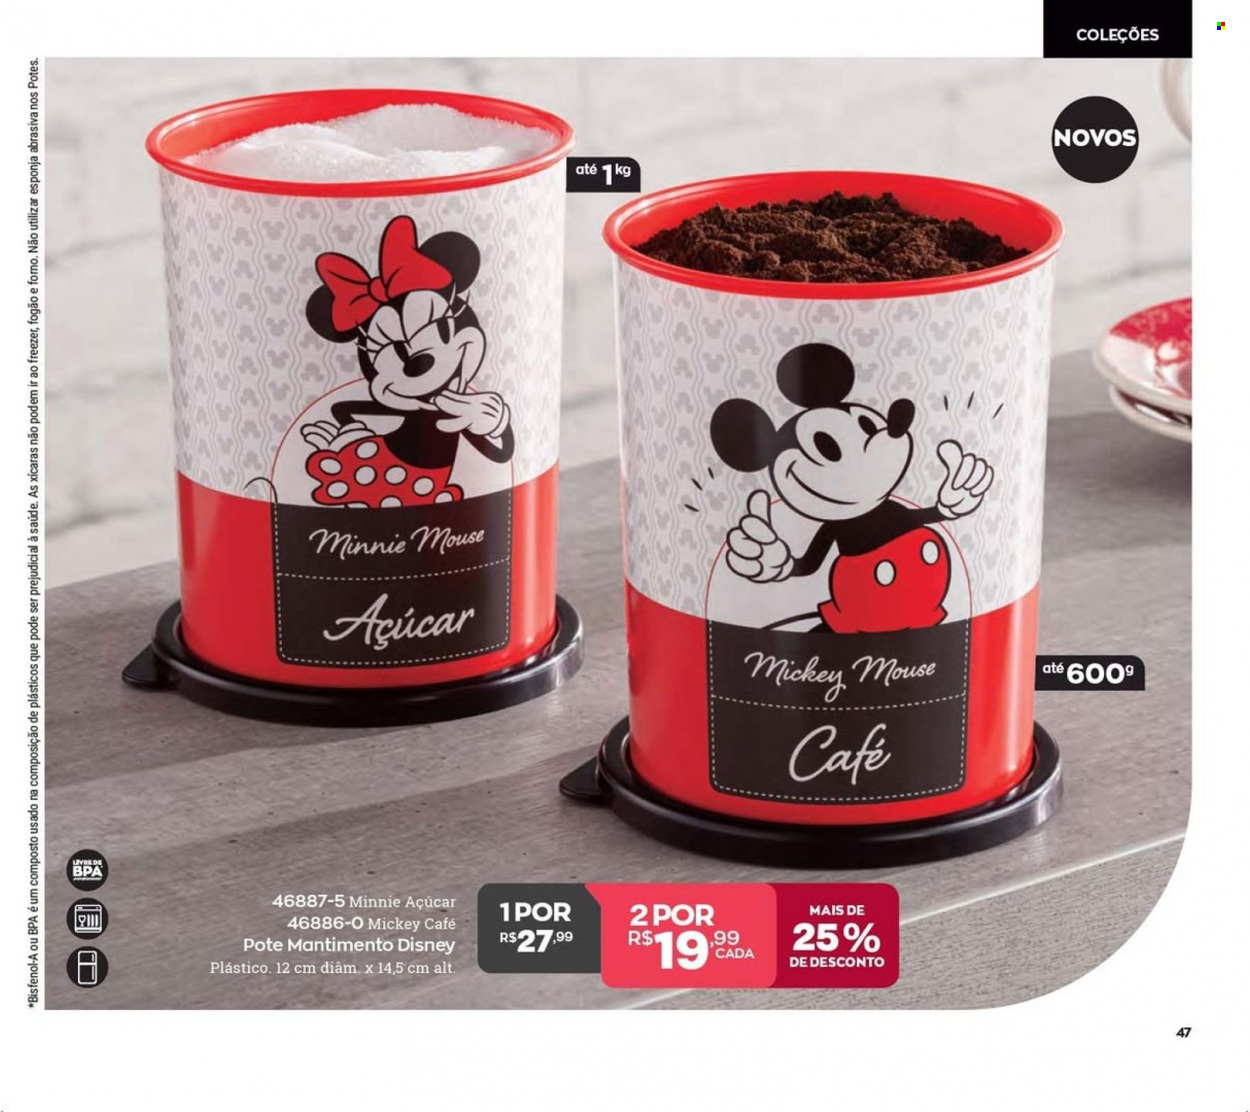 thumbnail - Folheto Avon - Produtos em promoção - Disney, Minnie, esponja. Página 47.